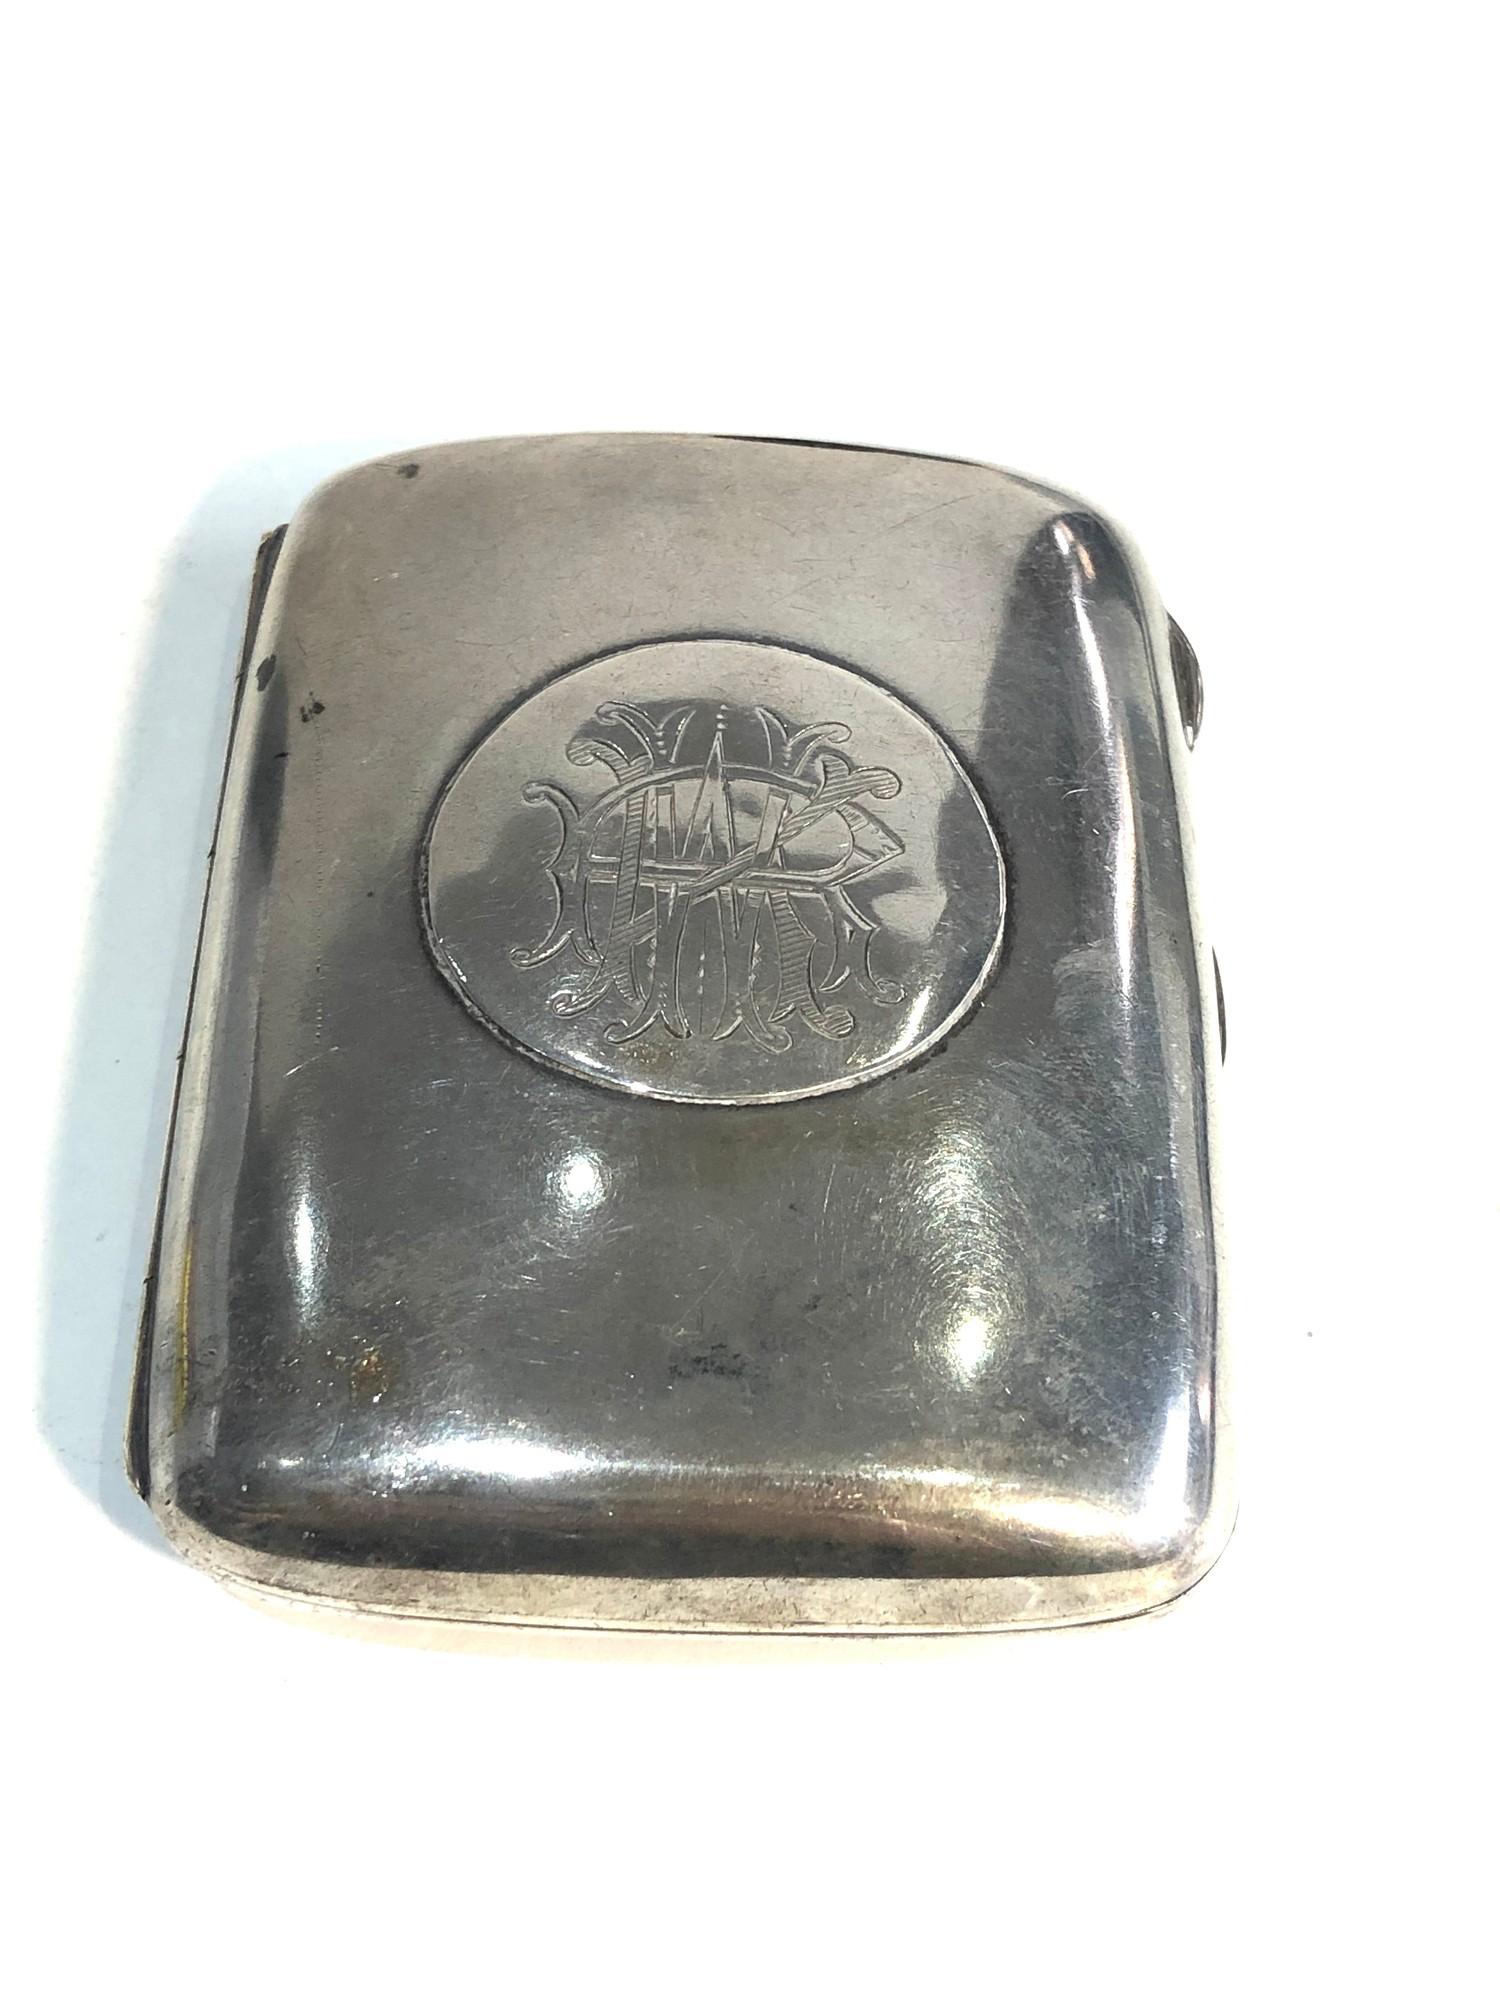 Silver cigarette case weight 88g